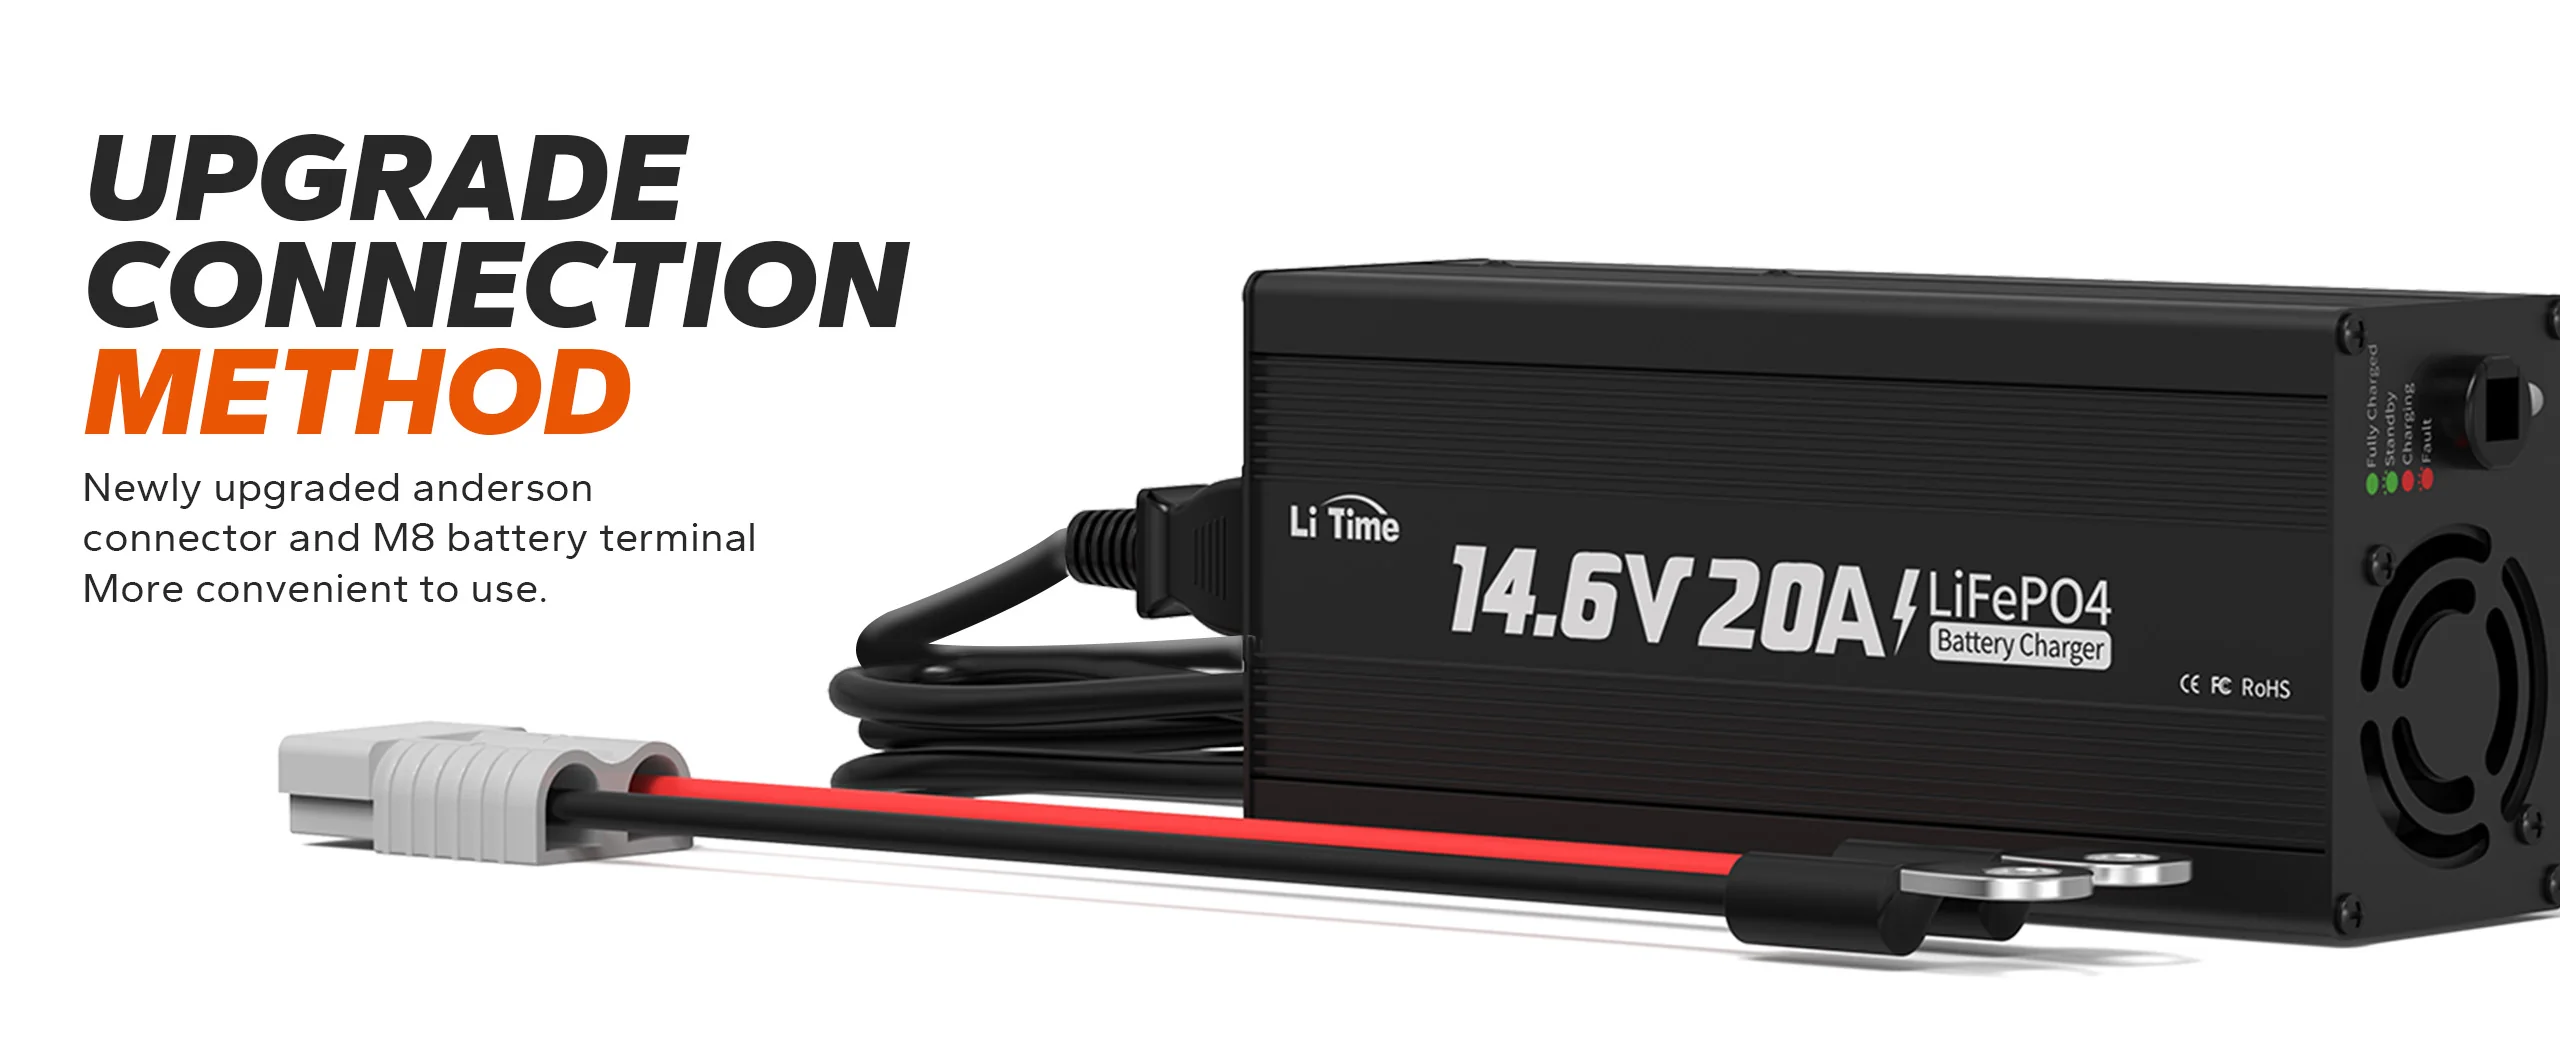 LiTime 12V (14.6V) 20A LiFePO4 Lithium Battery Charger